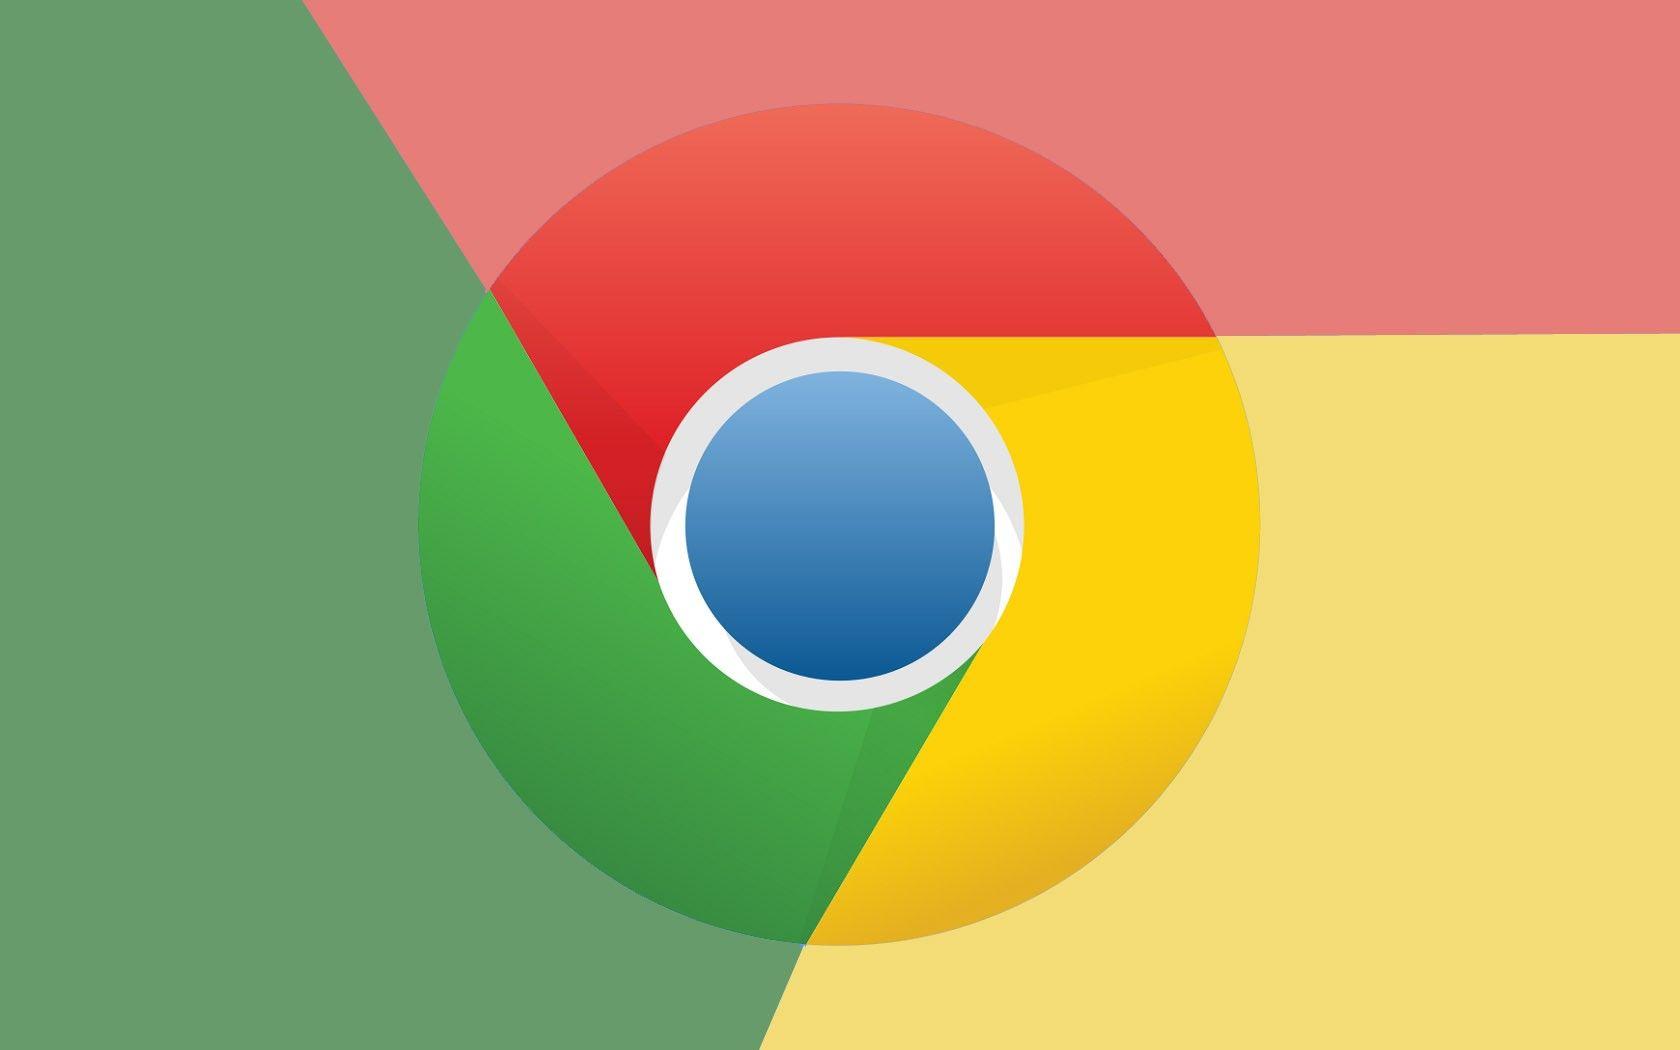 Google Chrome Wallpaper HD. Amazing Wallpaper. Google